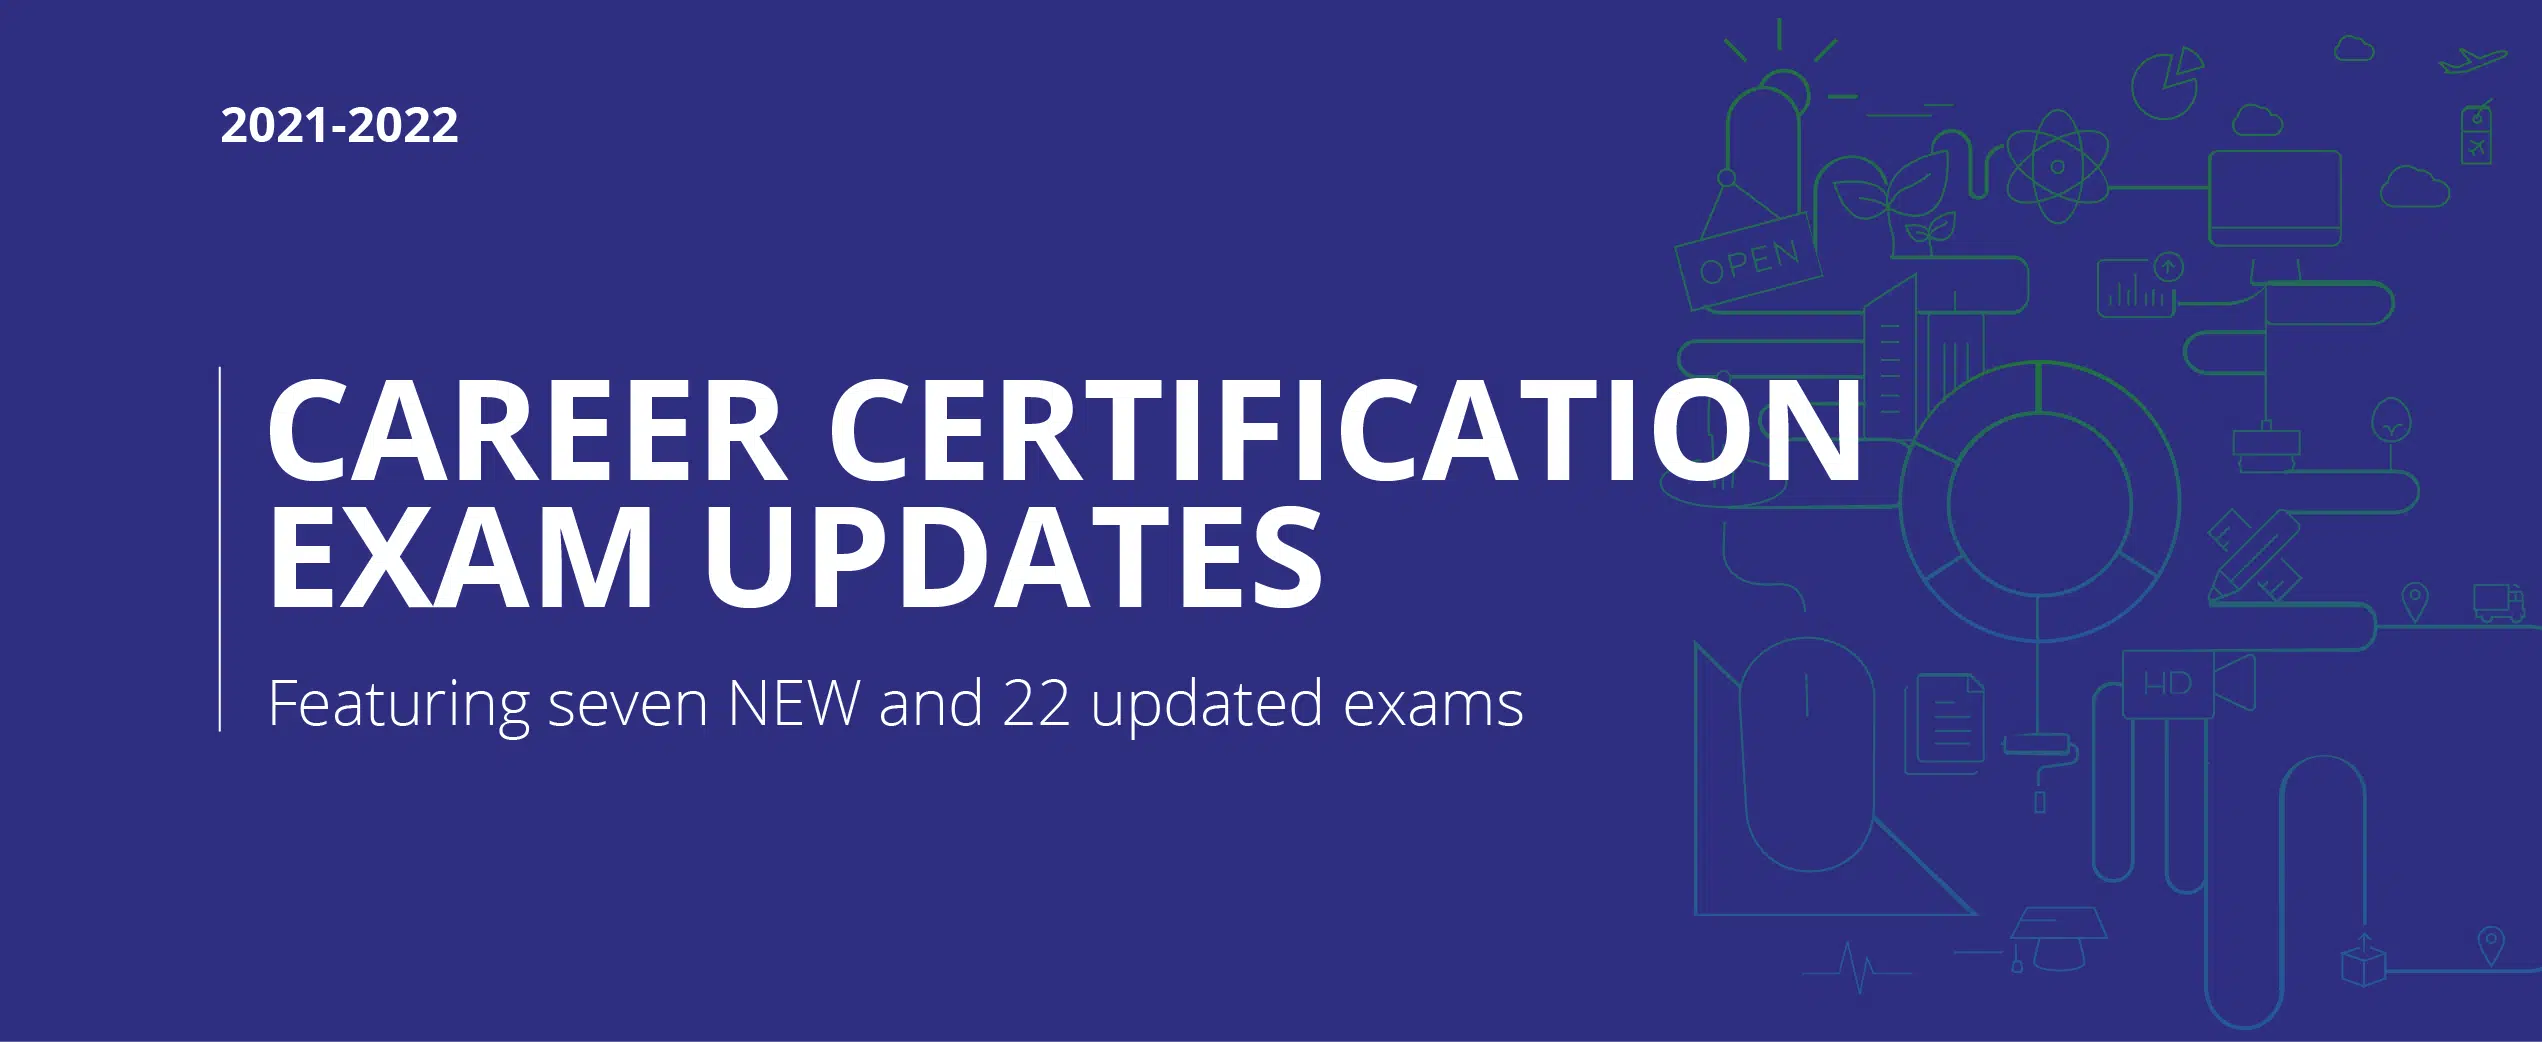 2021-2022 Career Certification Exam Updates